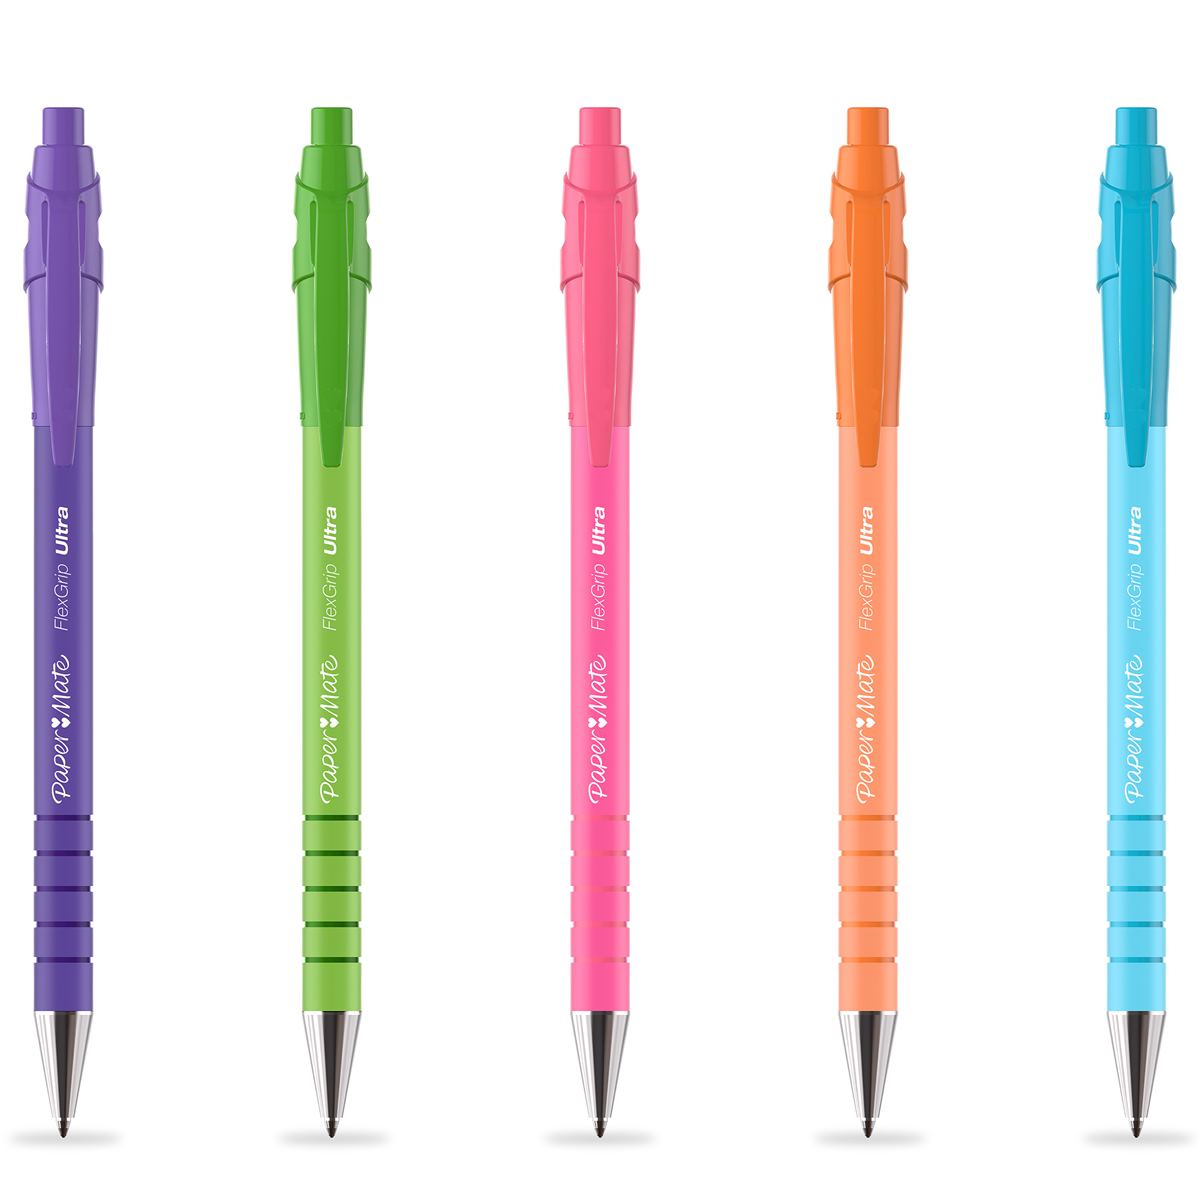 Paper Mate Flexgrip Ultra Bright Ballpoint Pens - Black Ink - Pack of 5